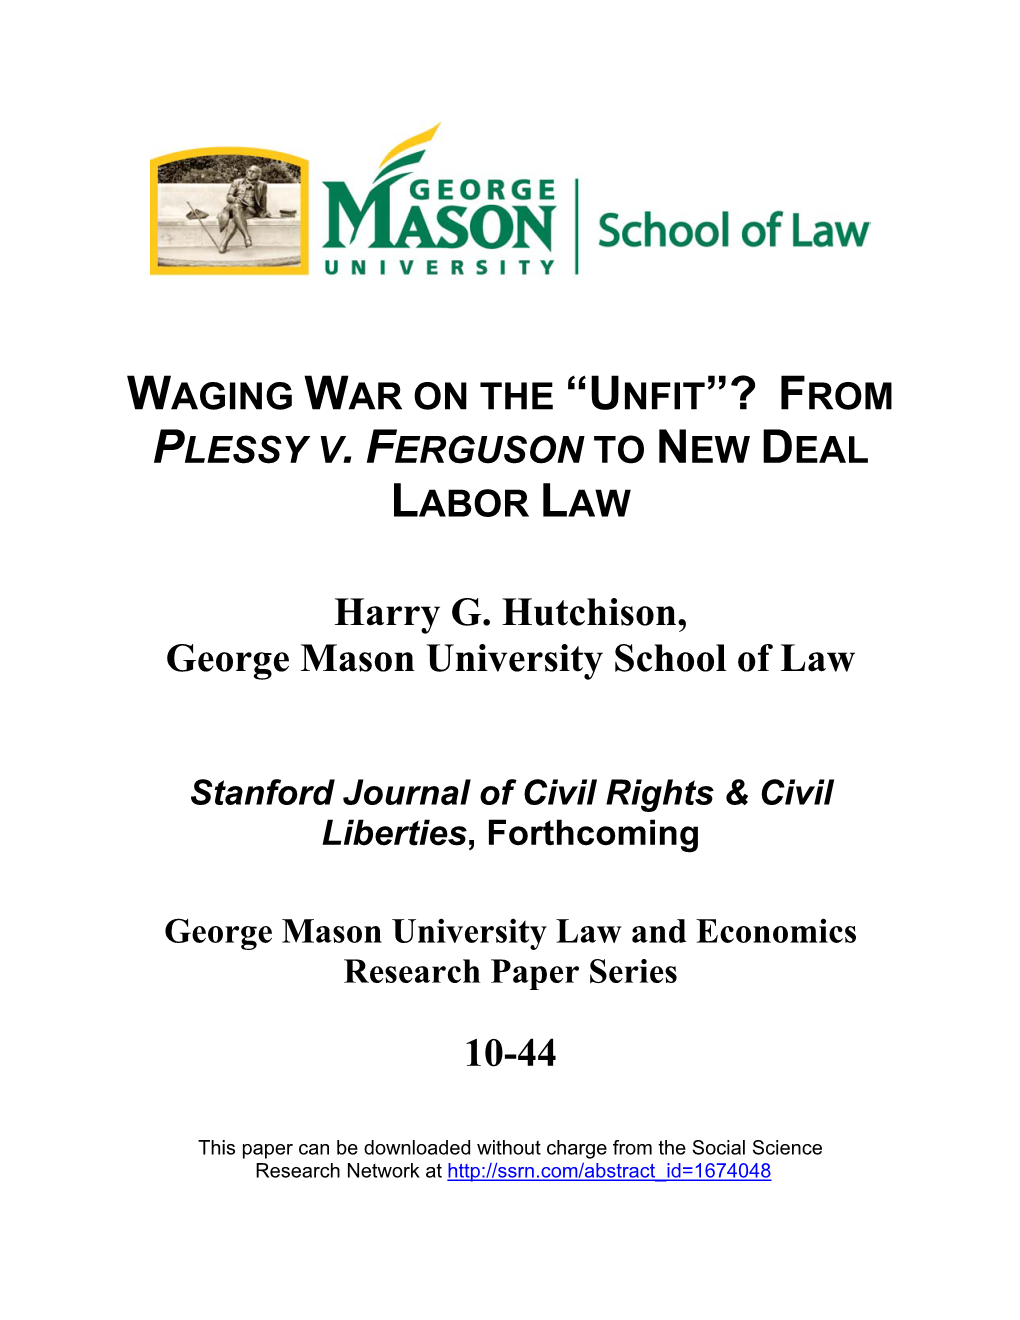 Harry G. Hutchison, George Mason University School of Law 10-44